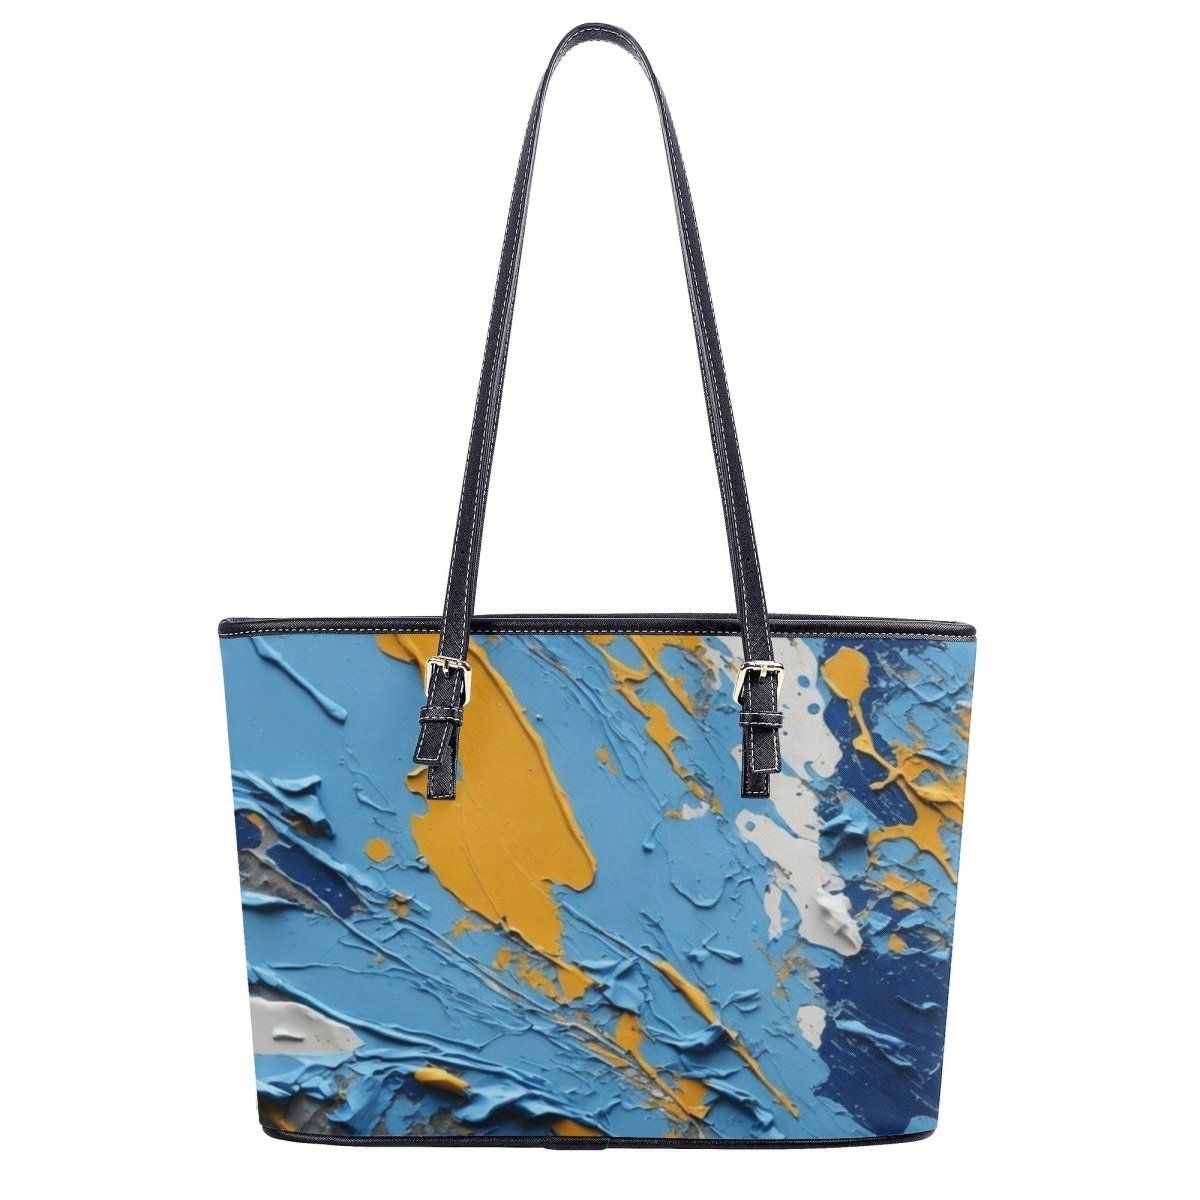 Paint splatter Fashion Tote Bags - Iron Phoenix GHG